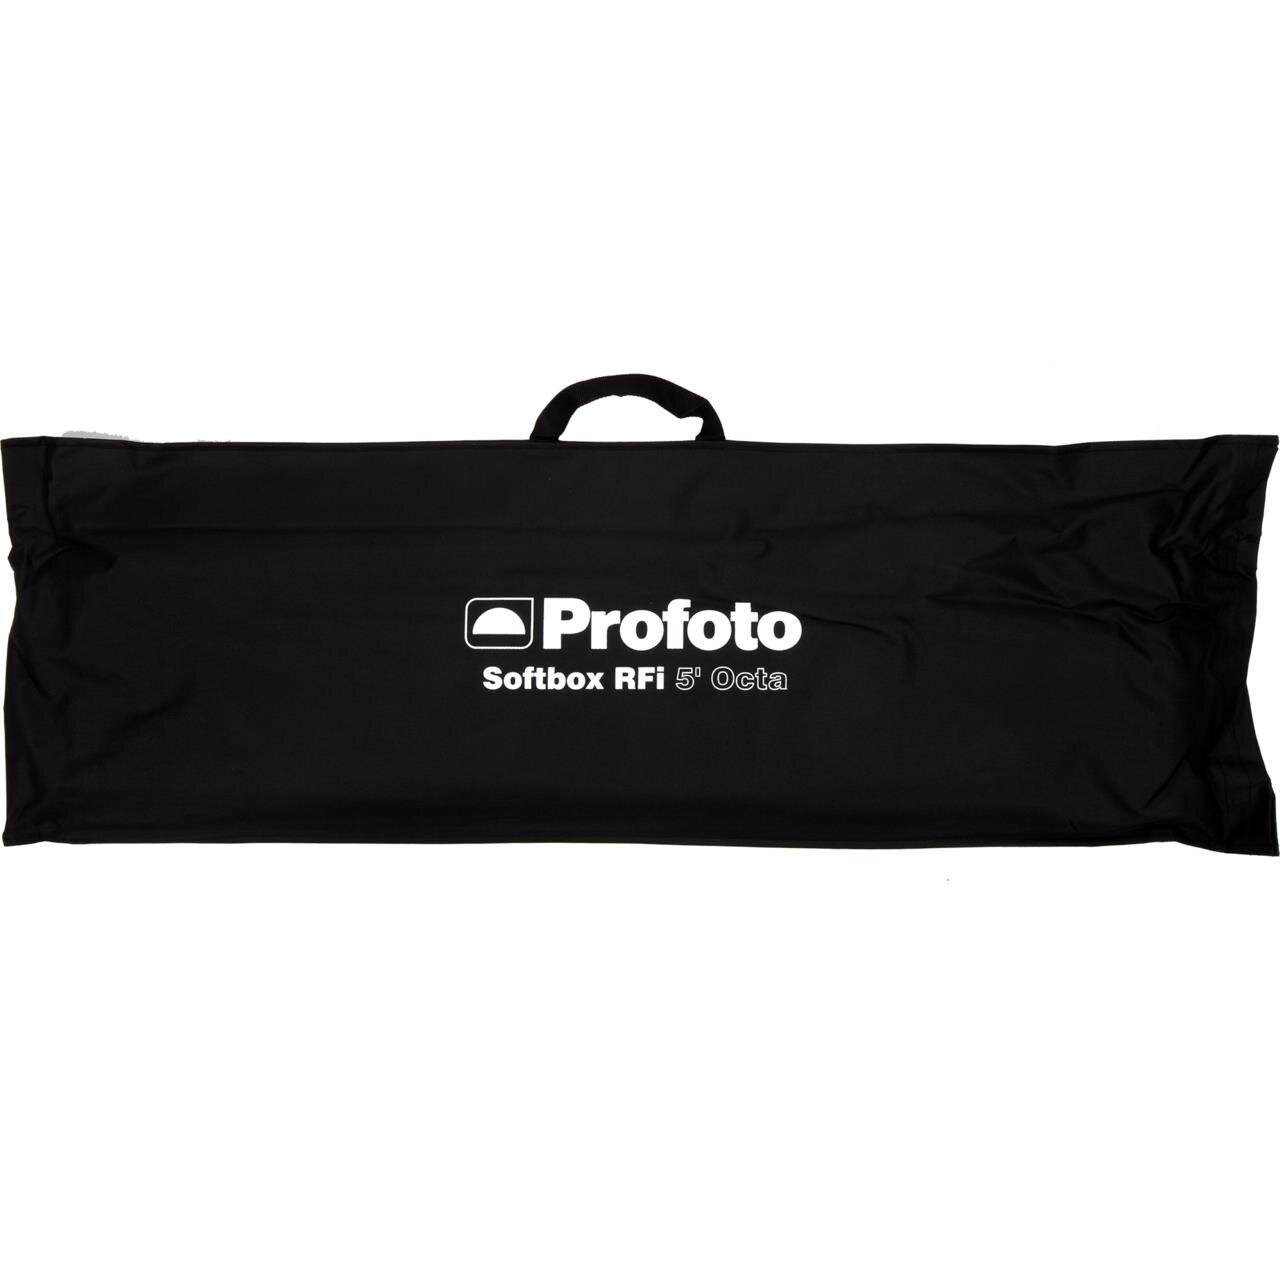 254712_f_profoto-rfi-softbox-5-octa-bag_productimage.png.jpeg